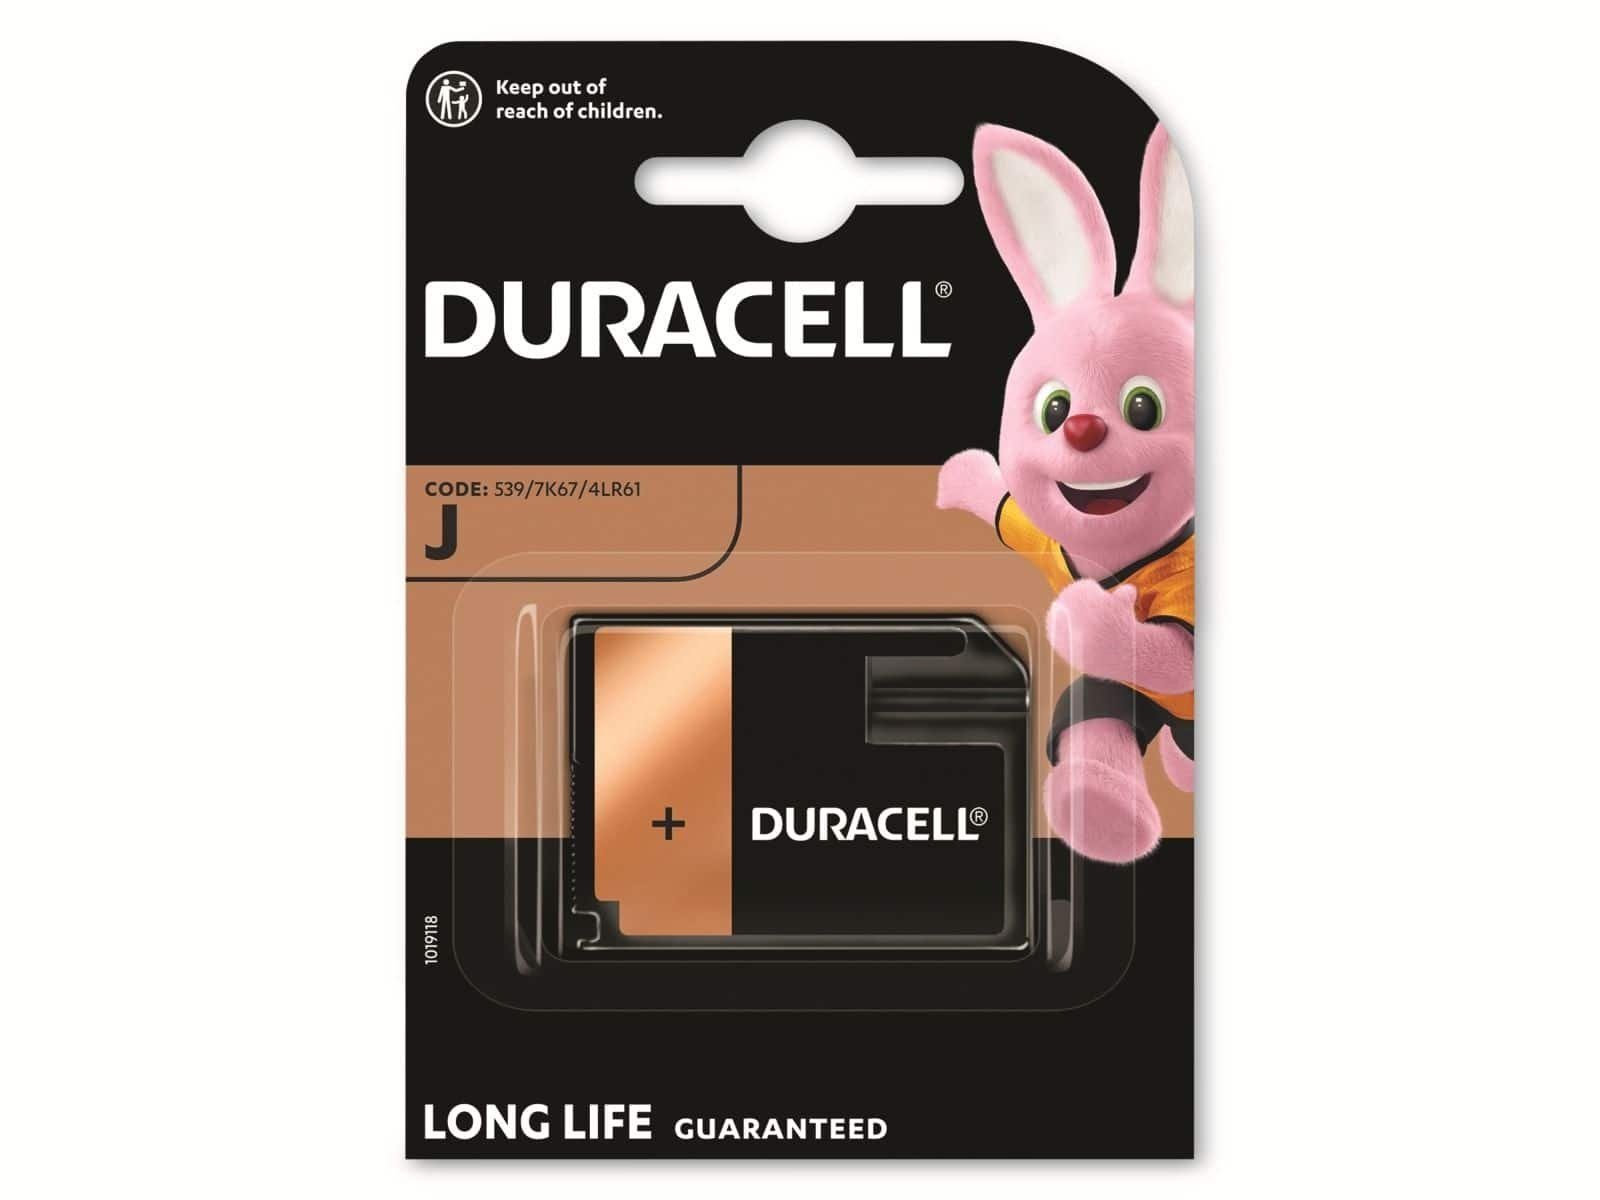 Duracell DURACELL Alkaline-Batterie 4LR61, 6V, Electronics Batterie